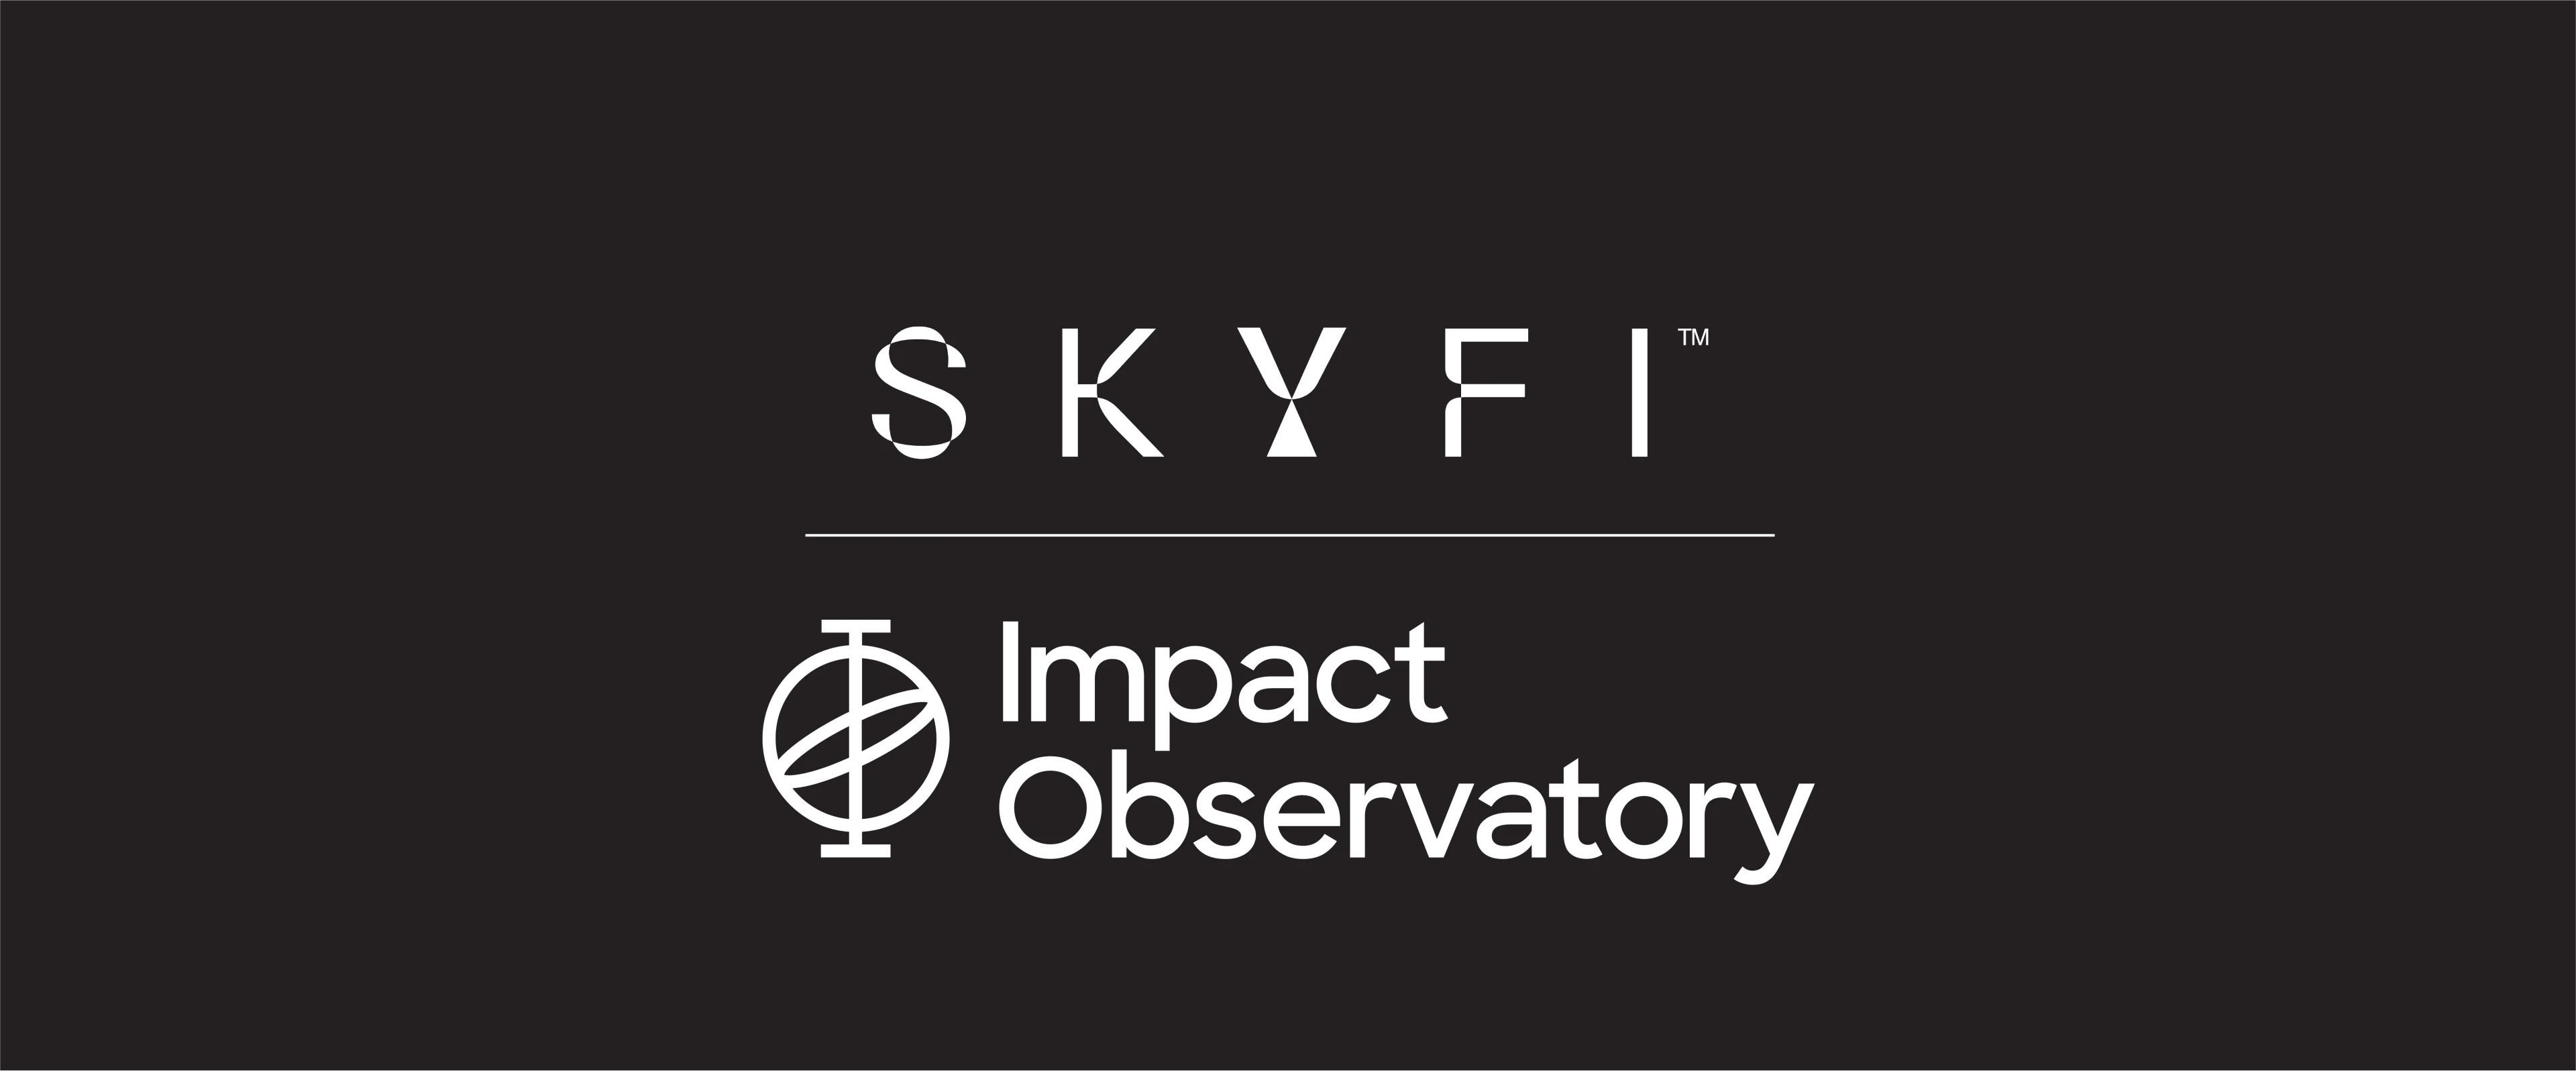 Impact Observatory and SkyFi partner